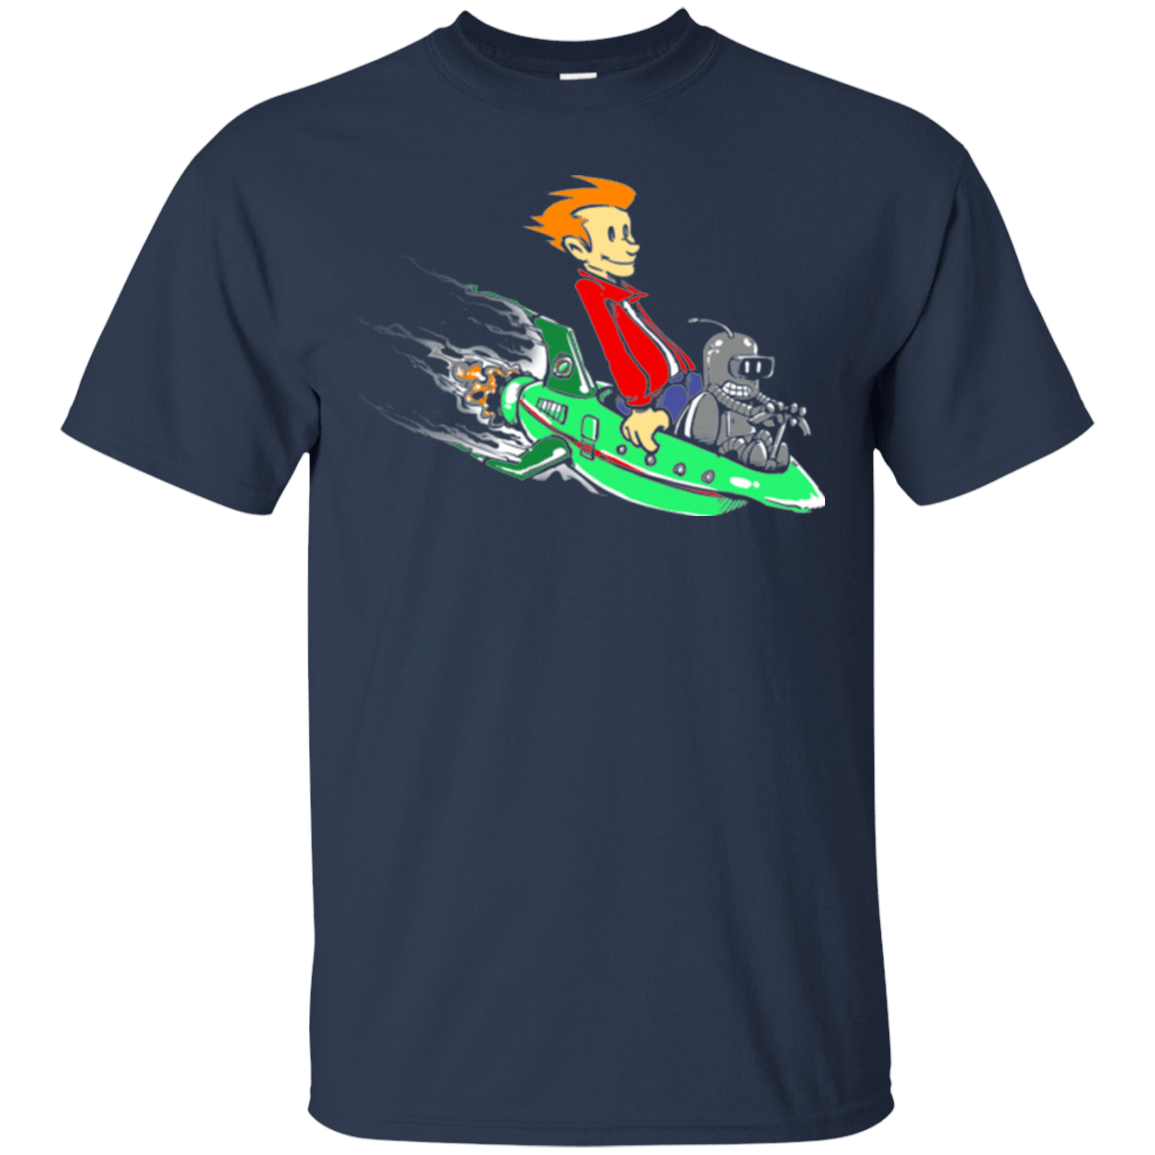 T-Shirts Navy / Small Bender and Fry T-Shirt